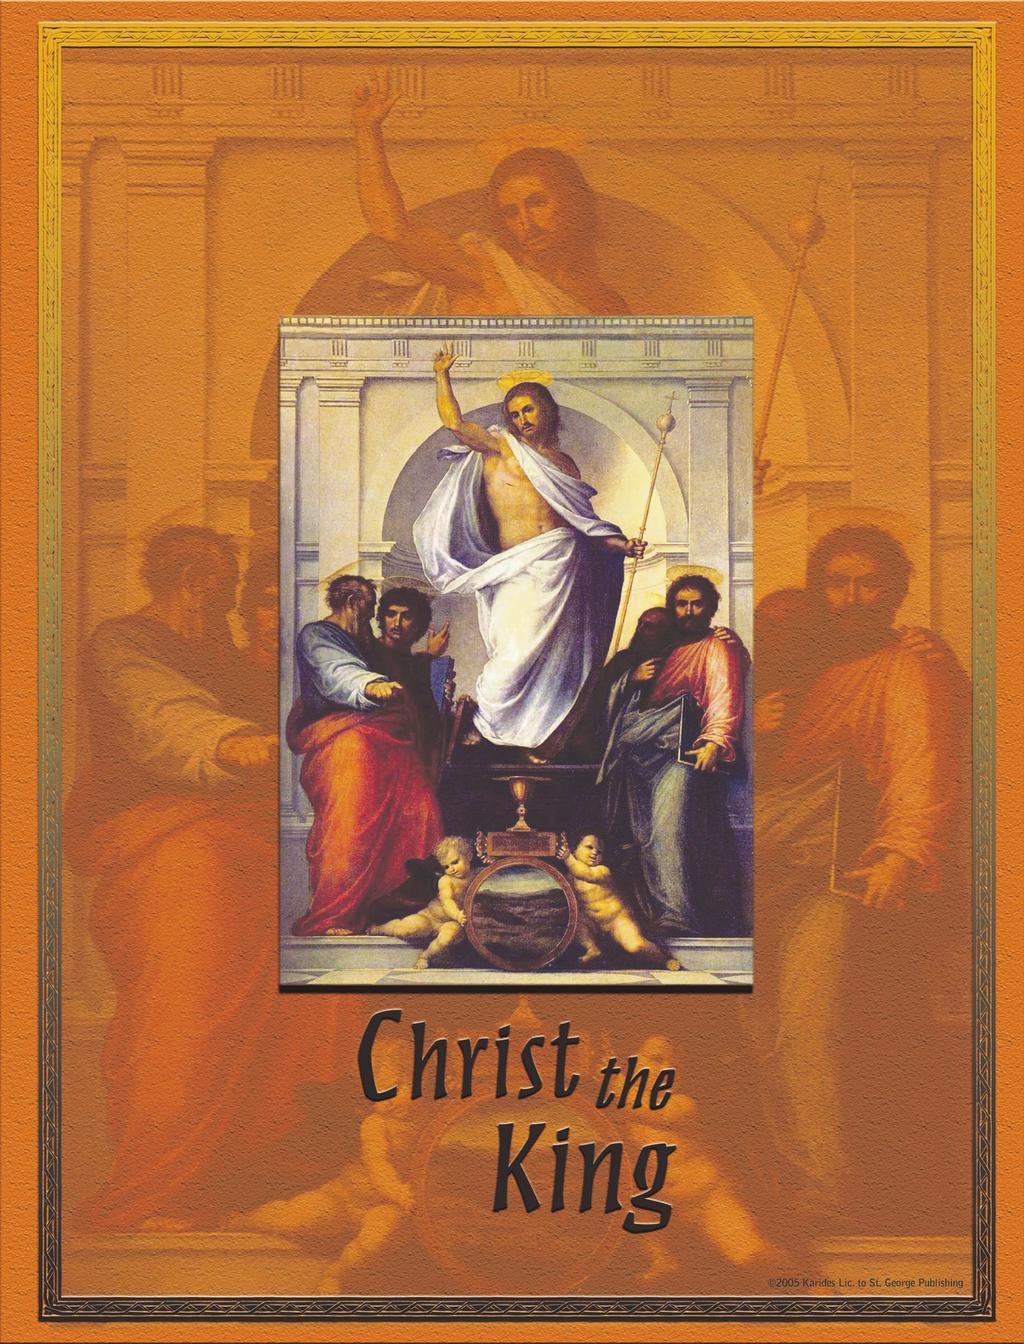 The Feast of Christ the King November 22, 2015 Sharon, MA